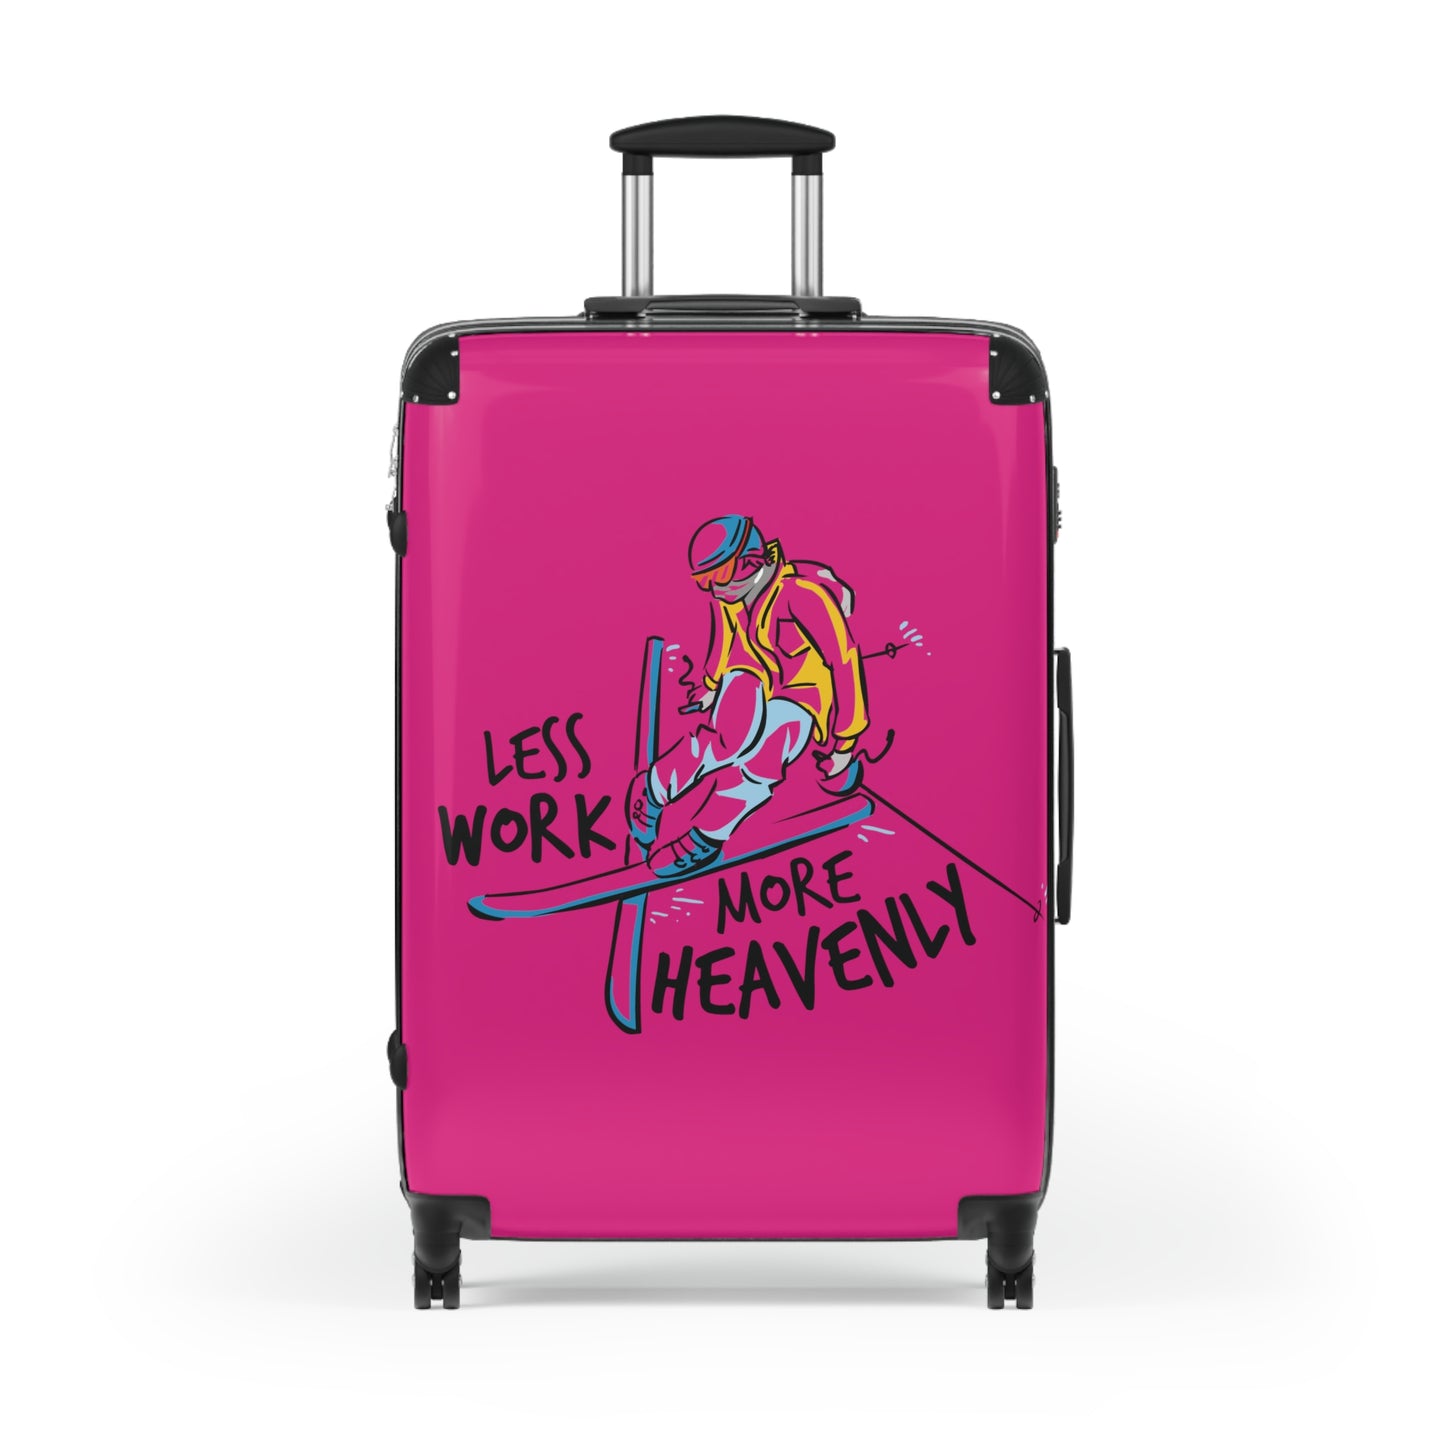 Less Work More Heavenly Custom Luggage